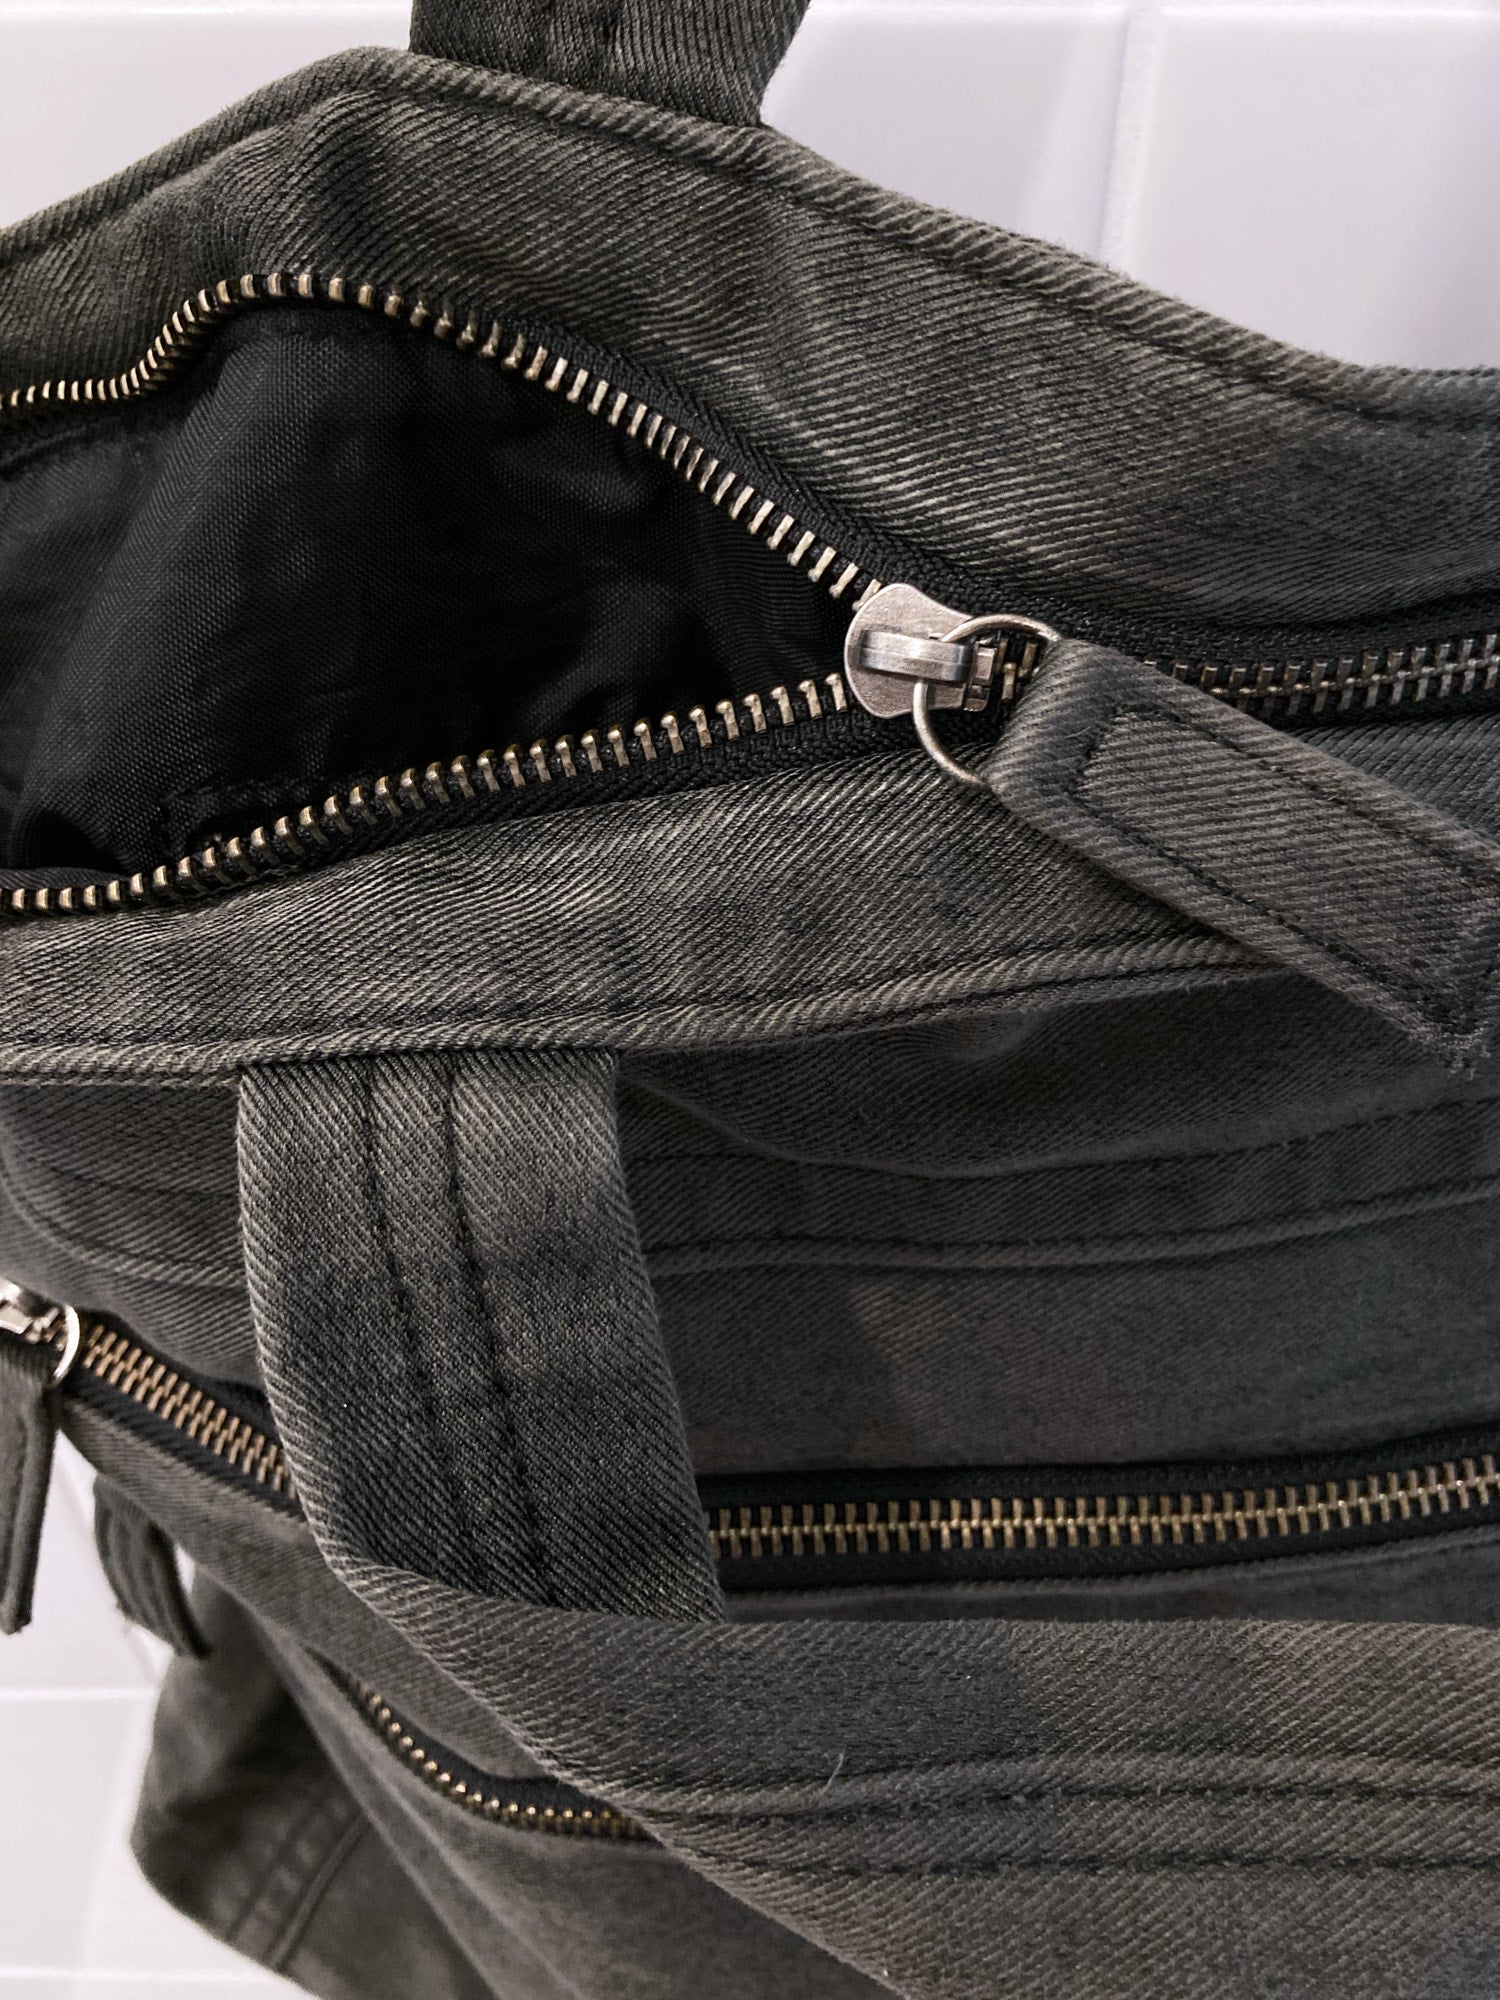 Jean Colonna large dark grey twill fabric multi zip tote bag